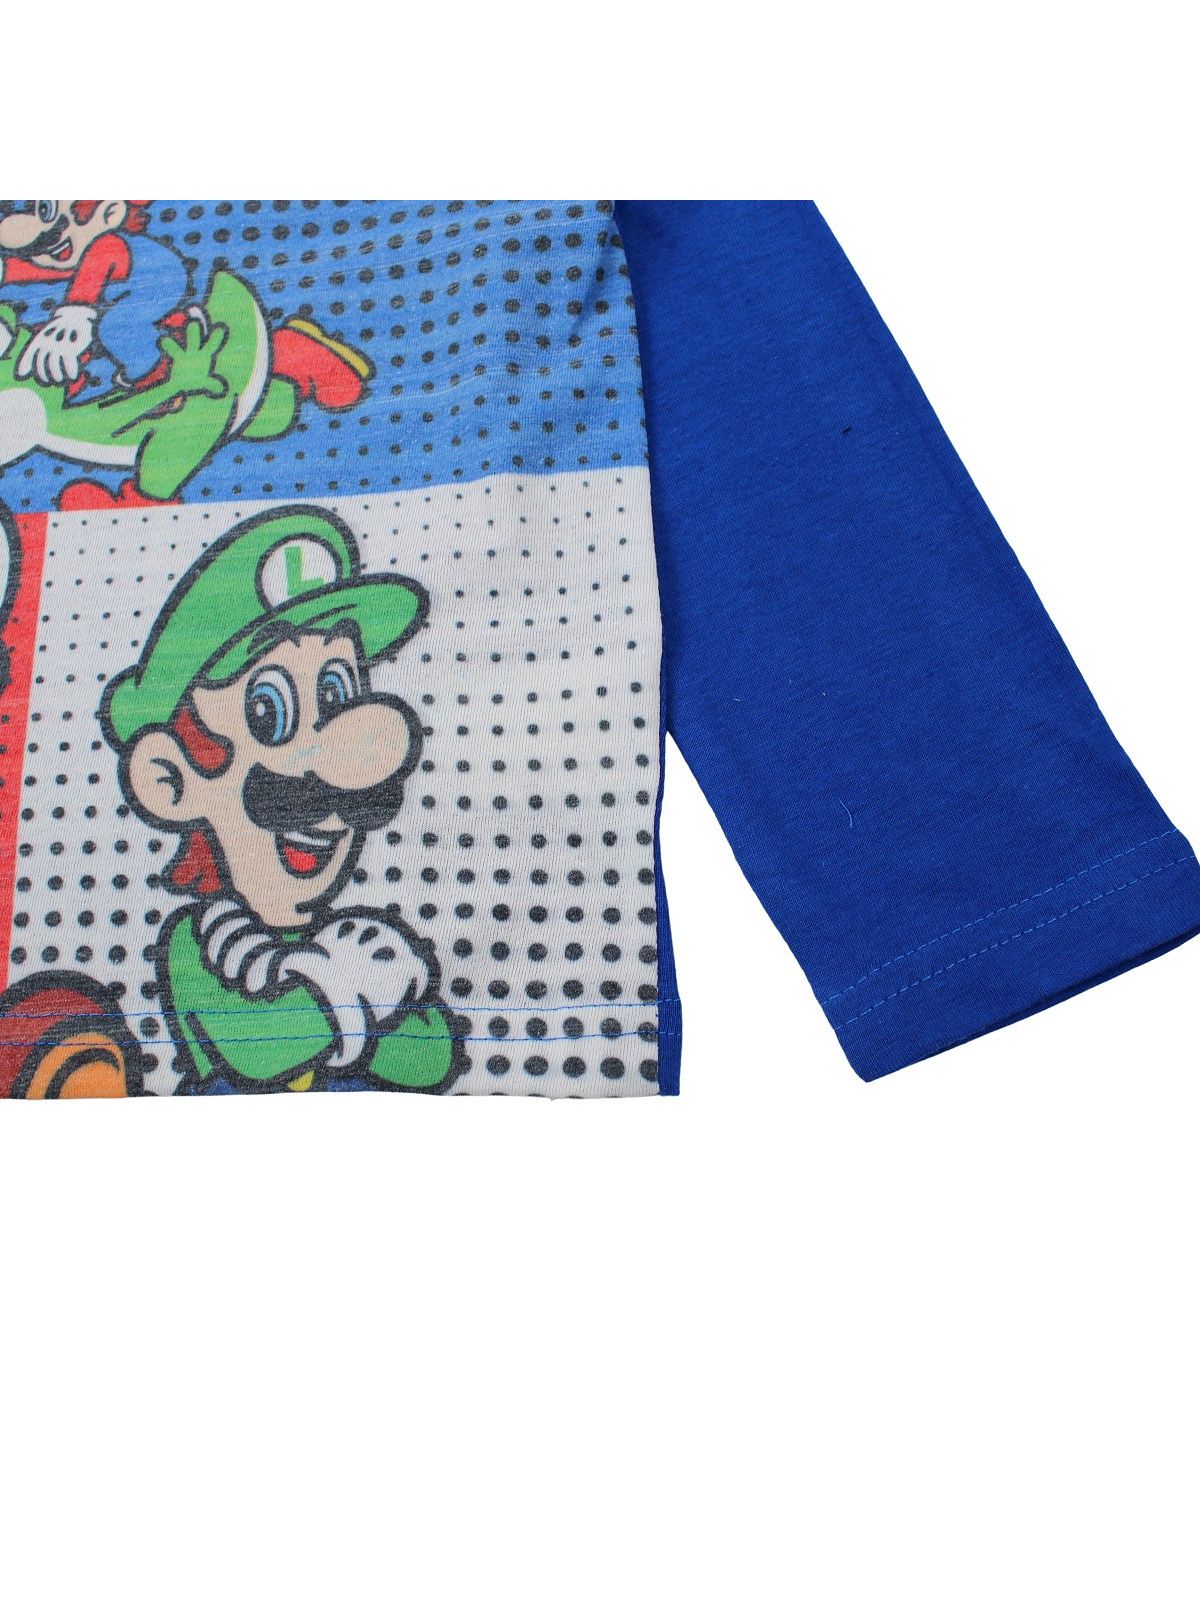 Super Mario Long sleeve T-shirt